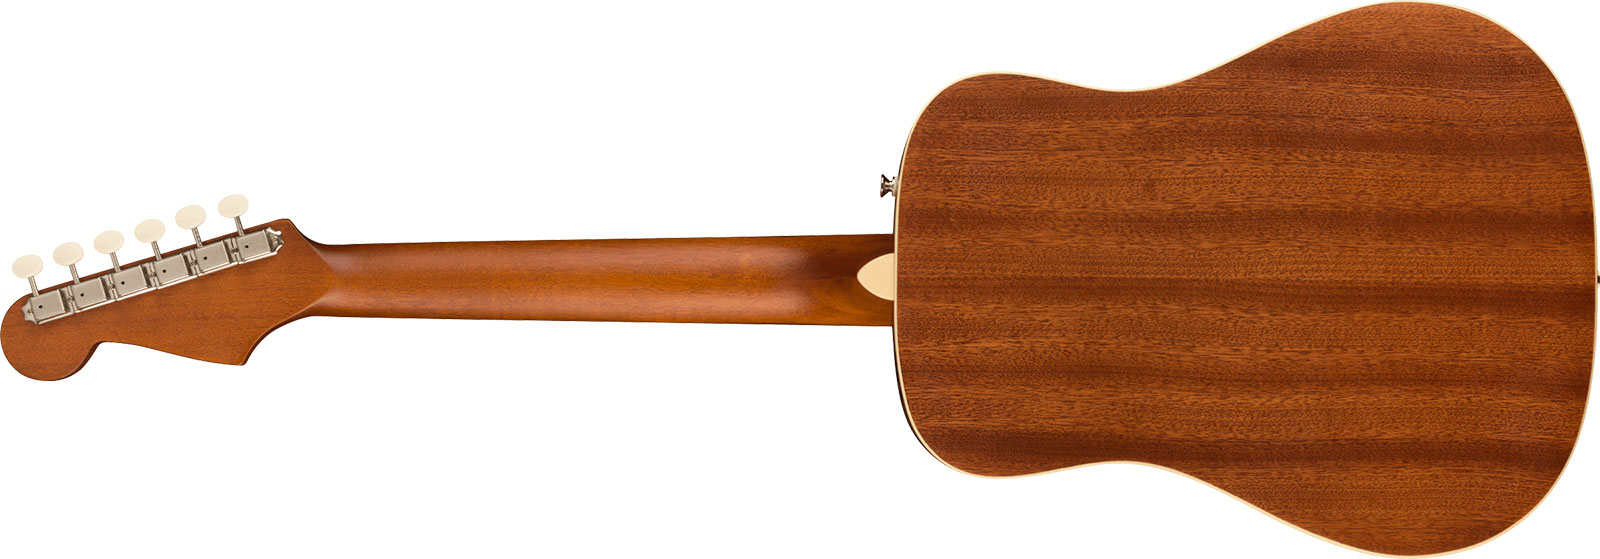 Fender Redondo Mini California Ltd Dreadnought 1/2 Epicea Acajou Noy - Black Top - Travel acoustic guitar - Variation 1